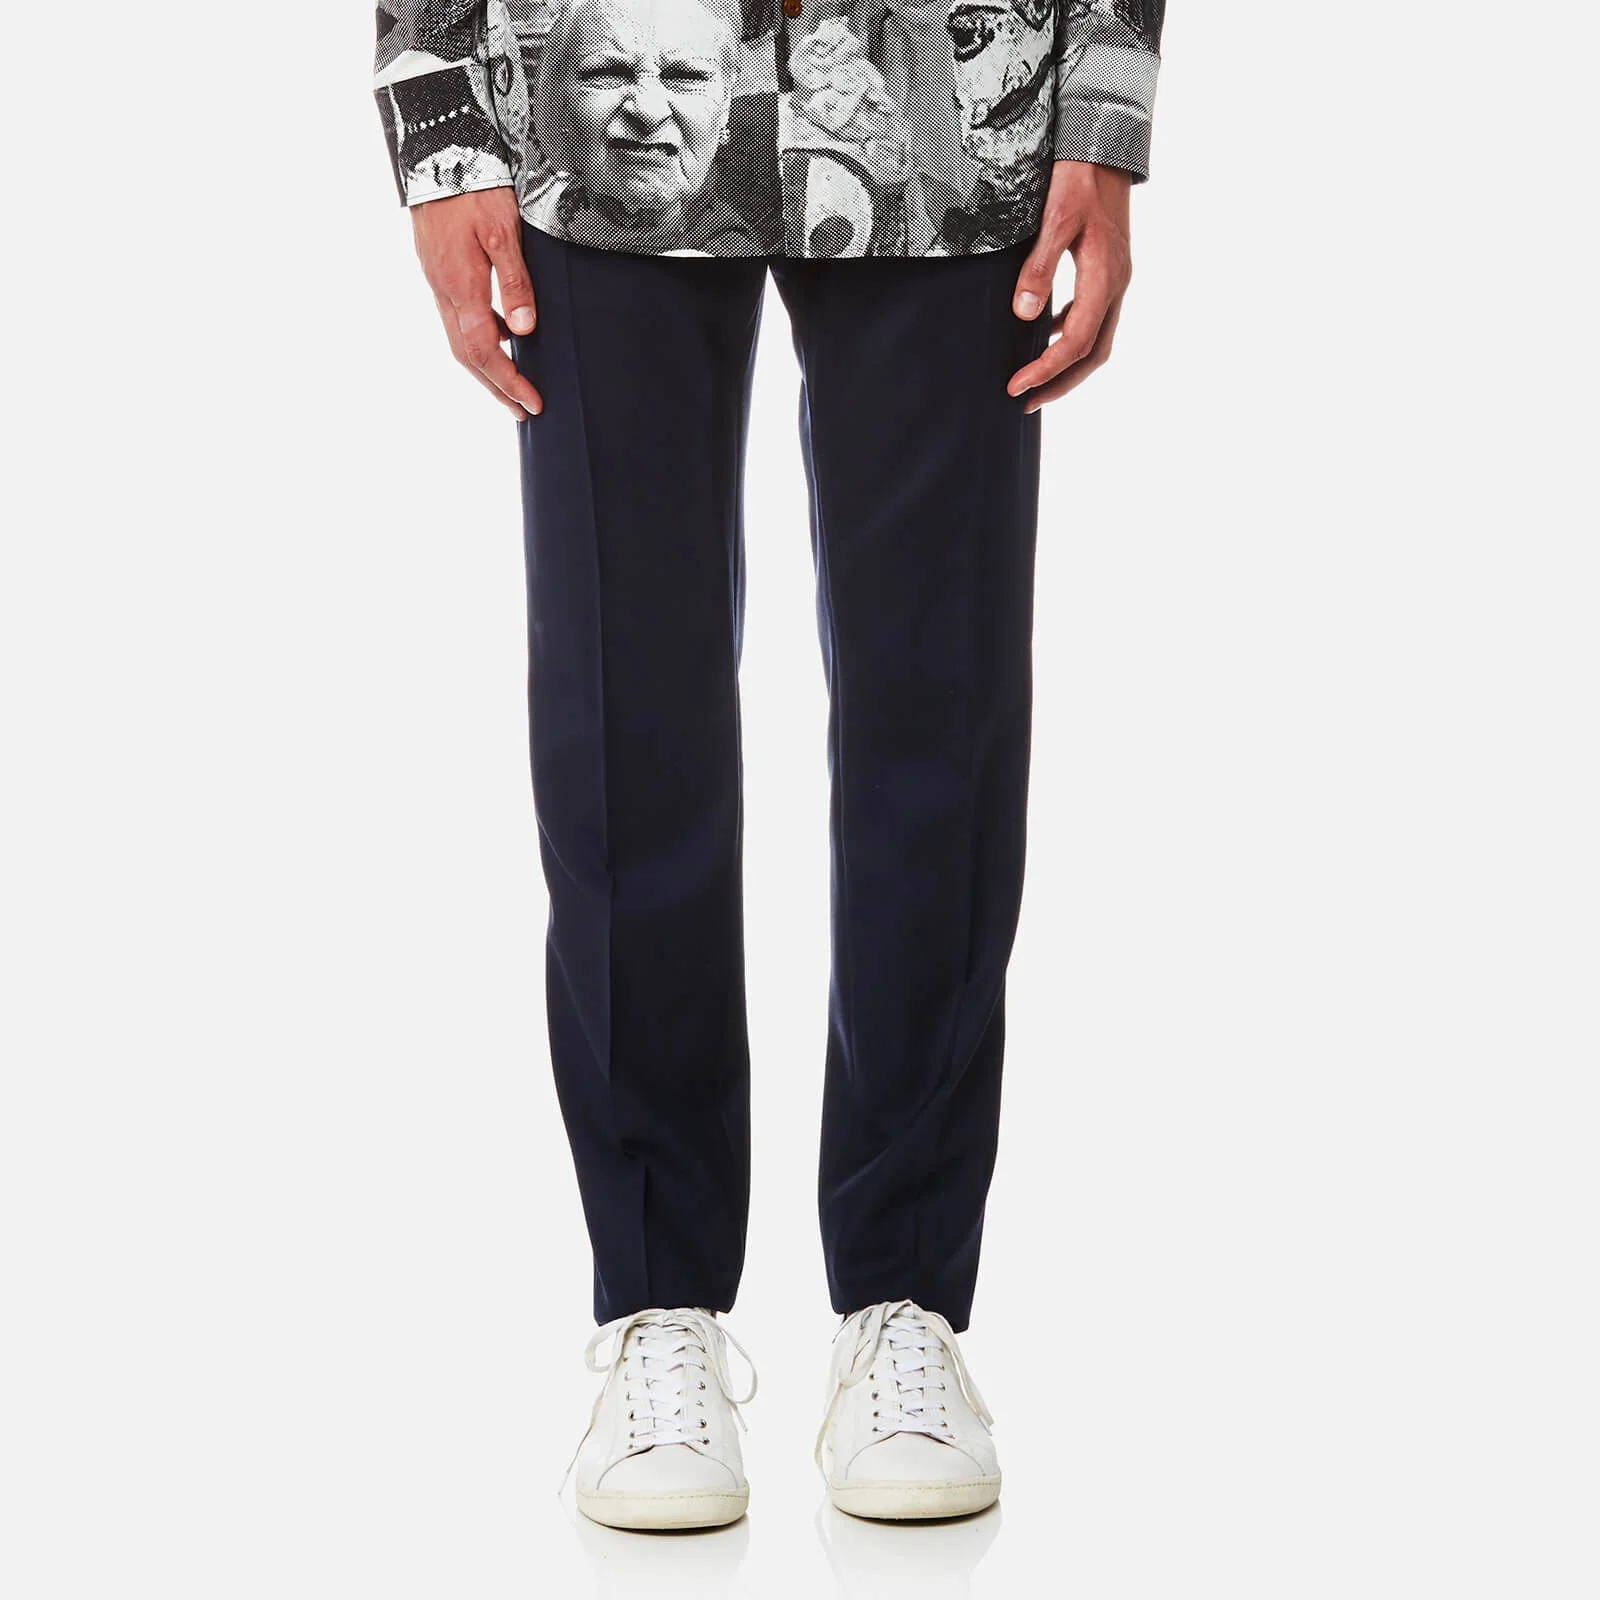 Vivienne Westwood Men's Classic Trousers - Navy Image 1